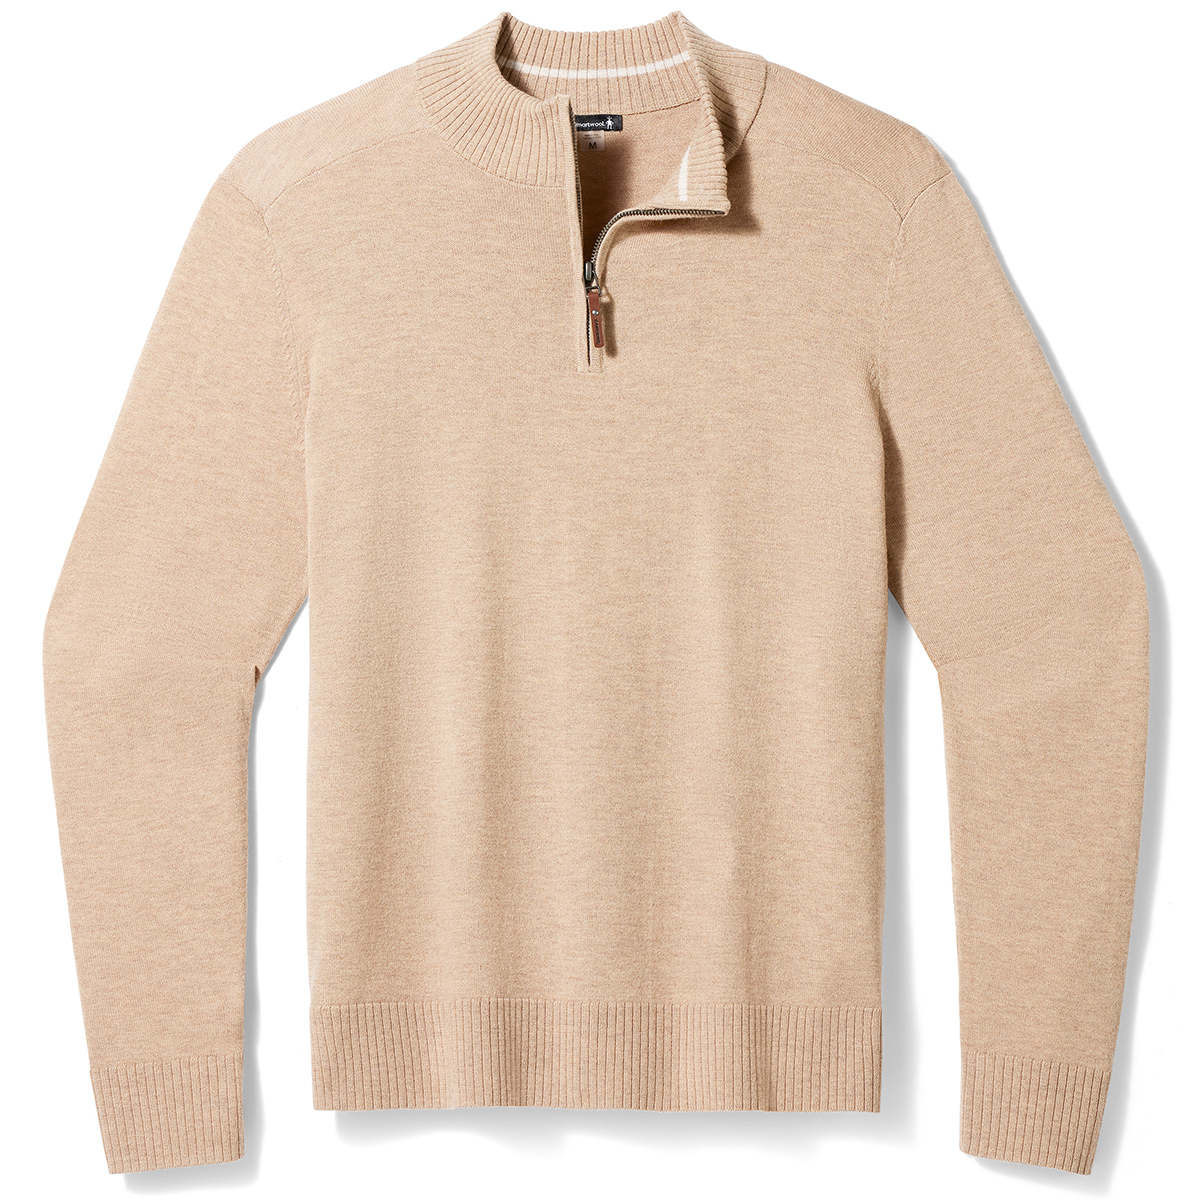 Smartwool Men's Sparwood Half-Zip Sweater - Size 2XL